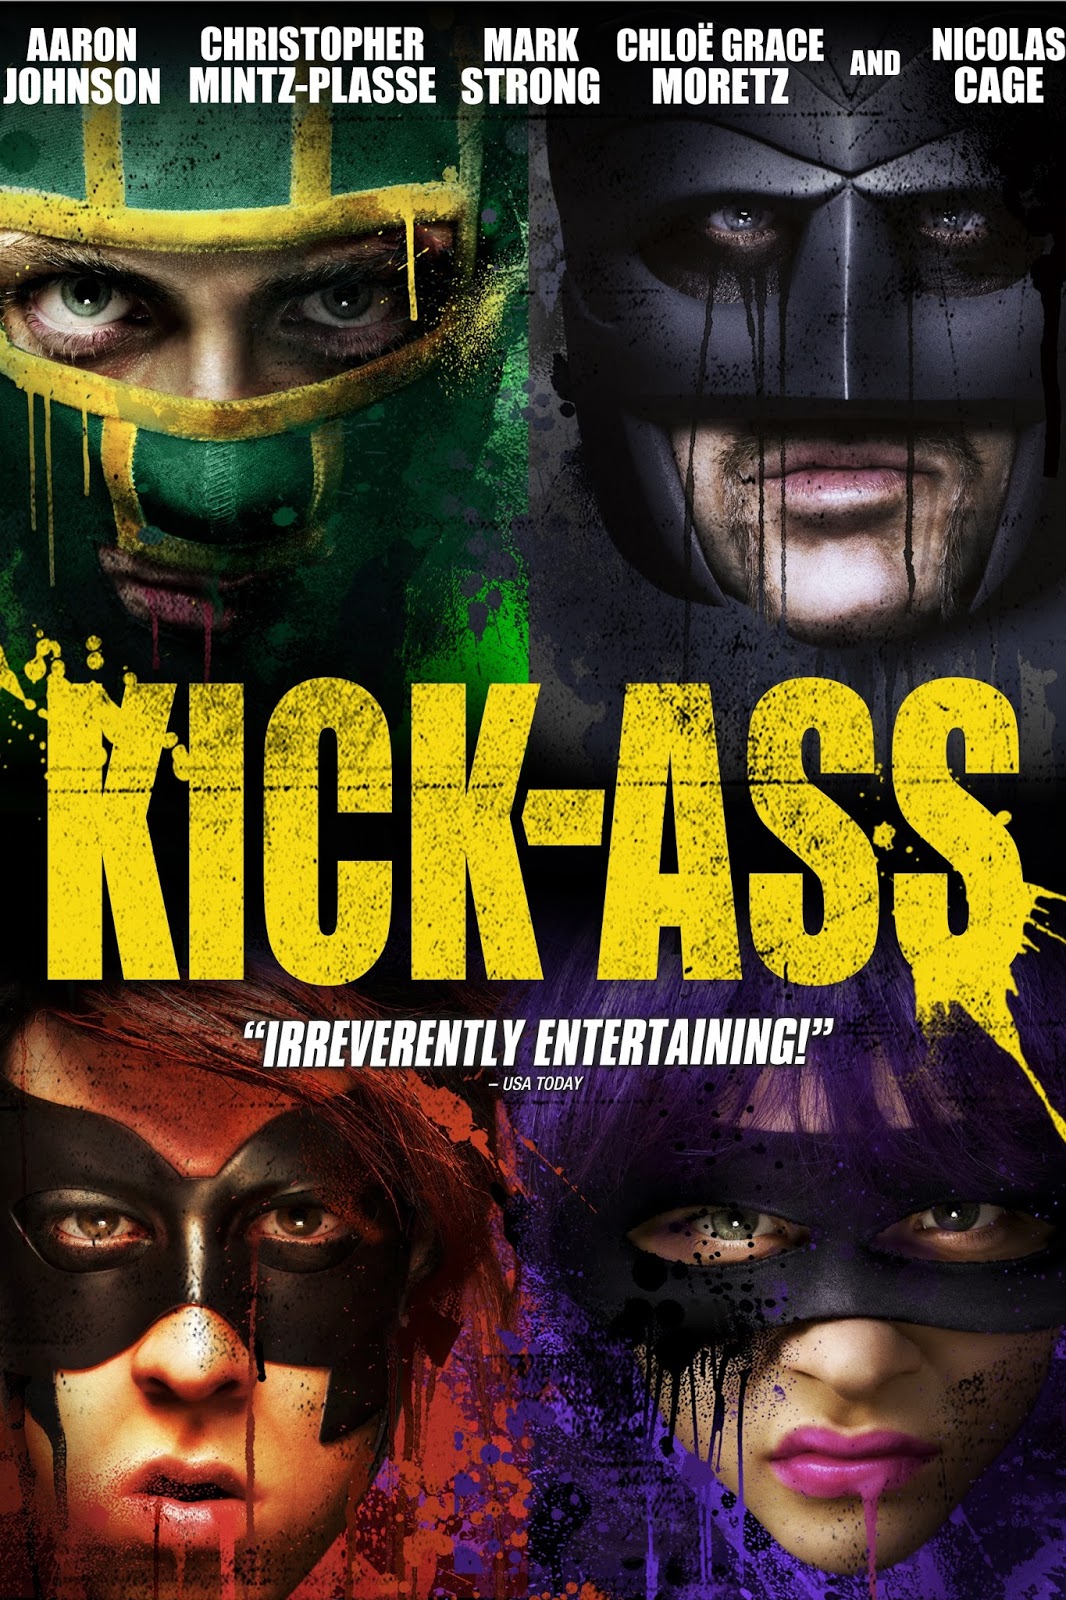 KICK-ASS (2010) review